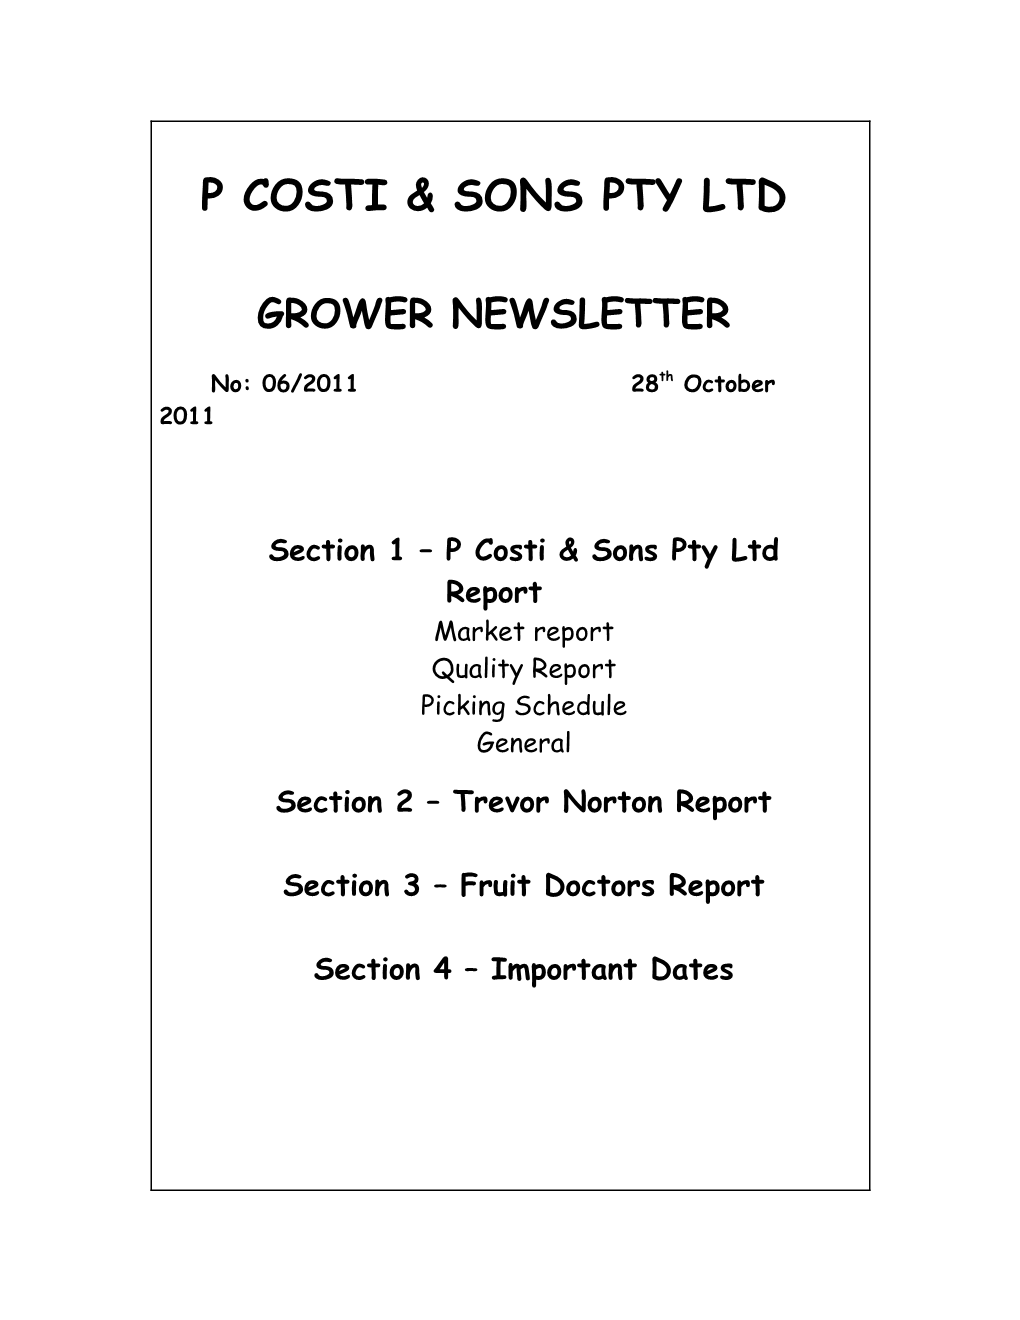 P Costi & Sons Pty Ltd